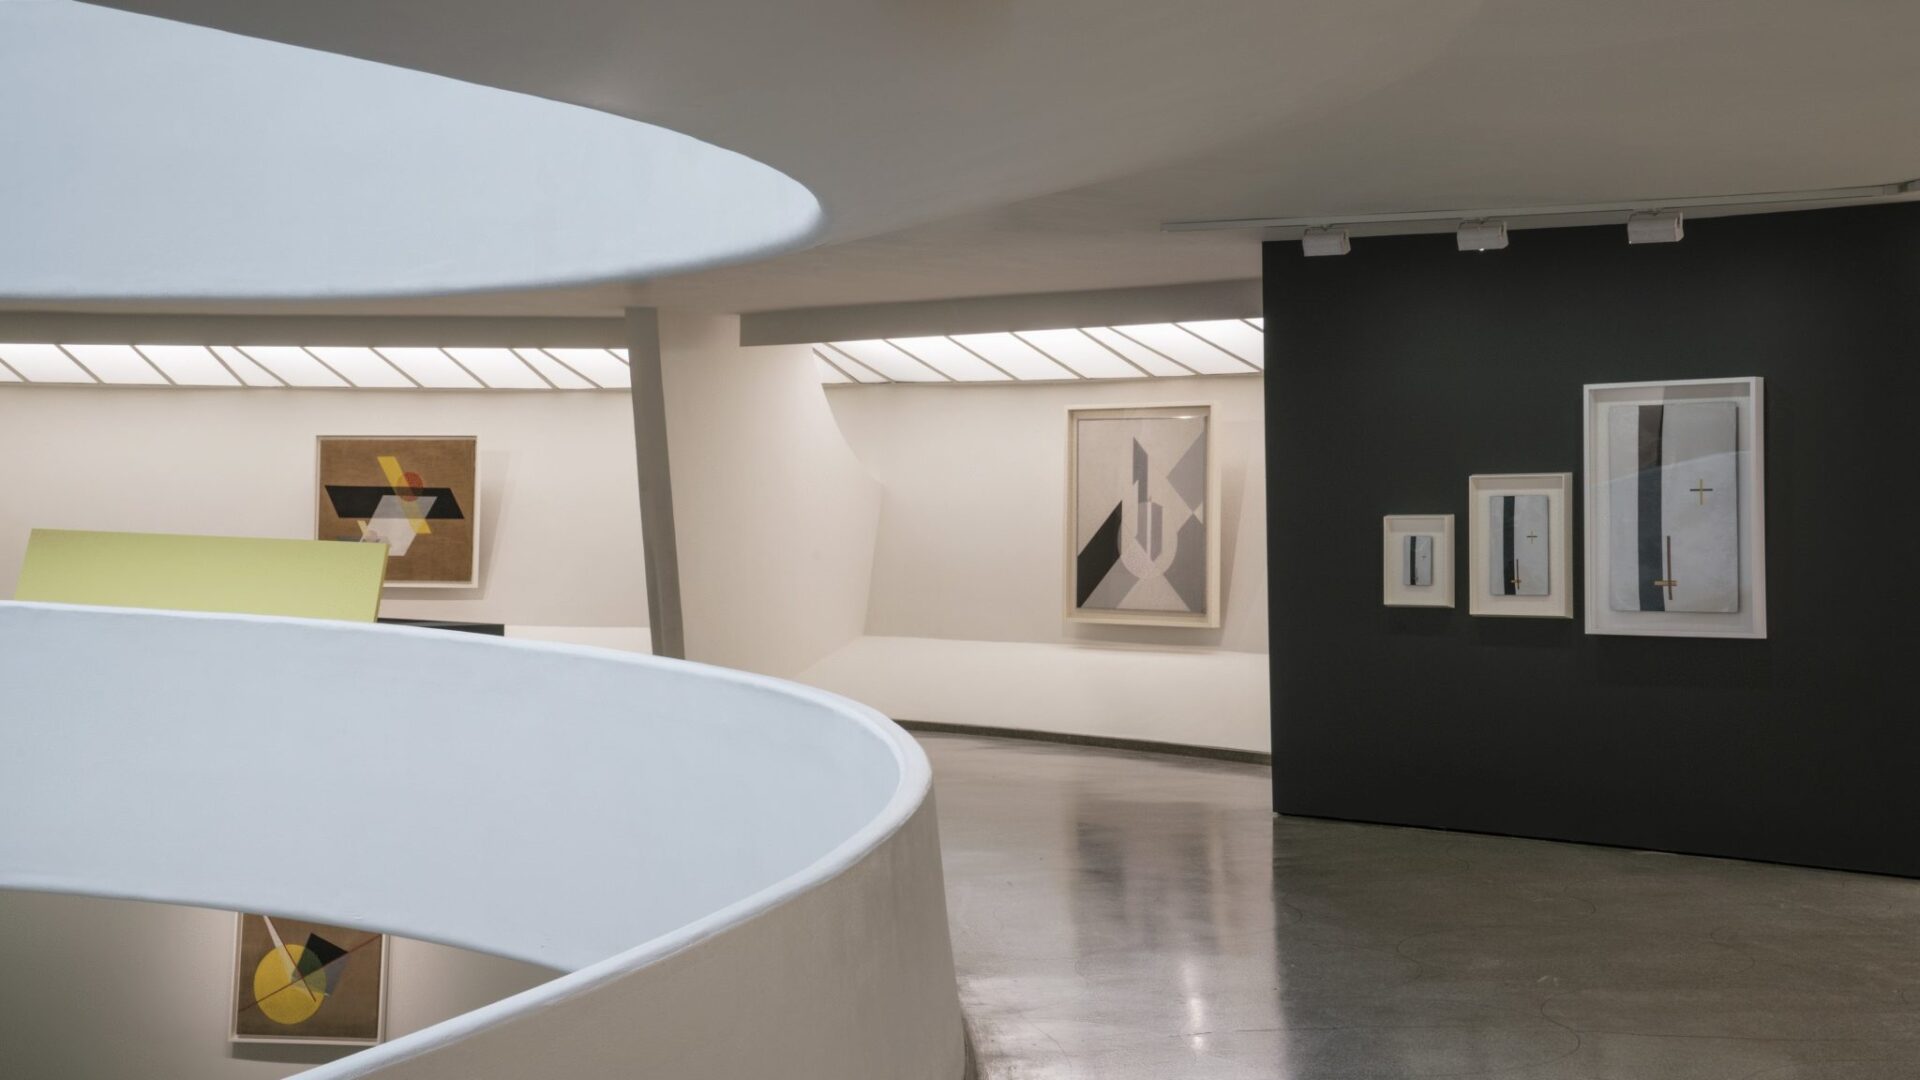 (Image 1) Installation view: Moholy-Nagy: Future Present, Solomon R. Guggenheim Museum, New York, May 27-September 7, 2016. Photo: David Heald © Solomon R. Guggenheim Foundation 